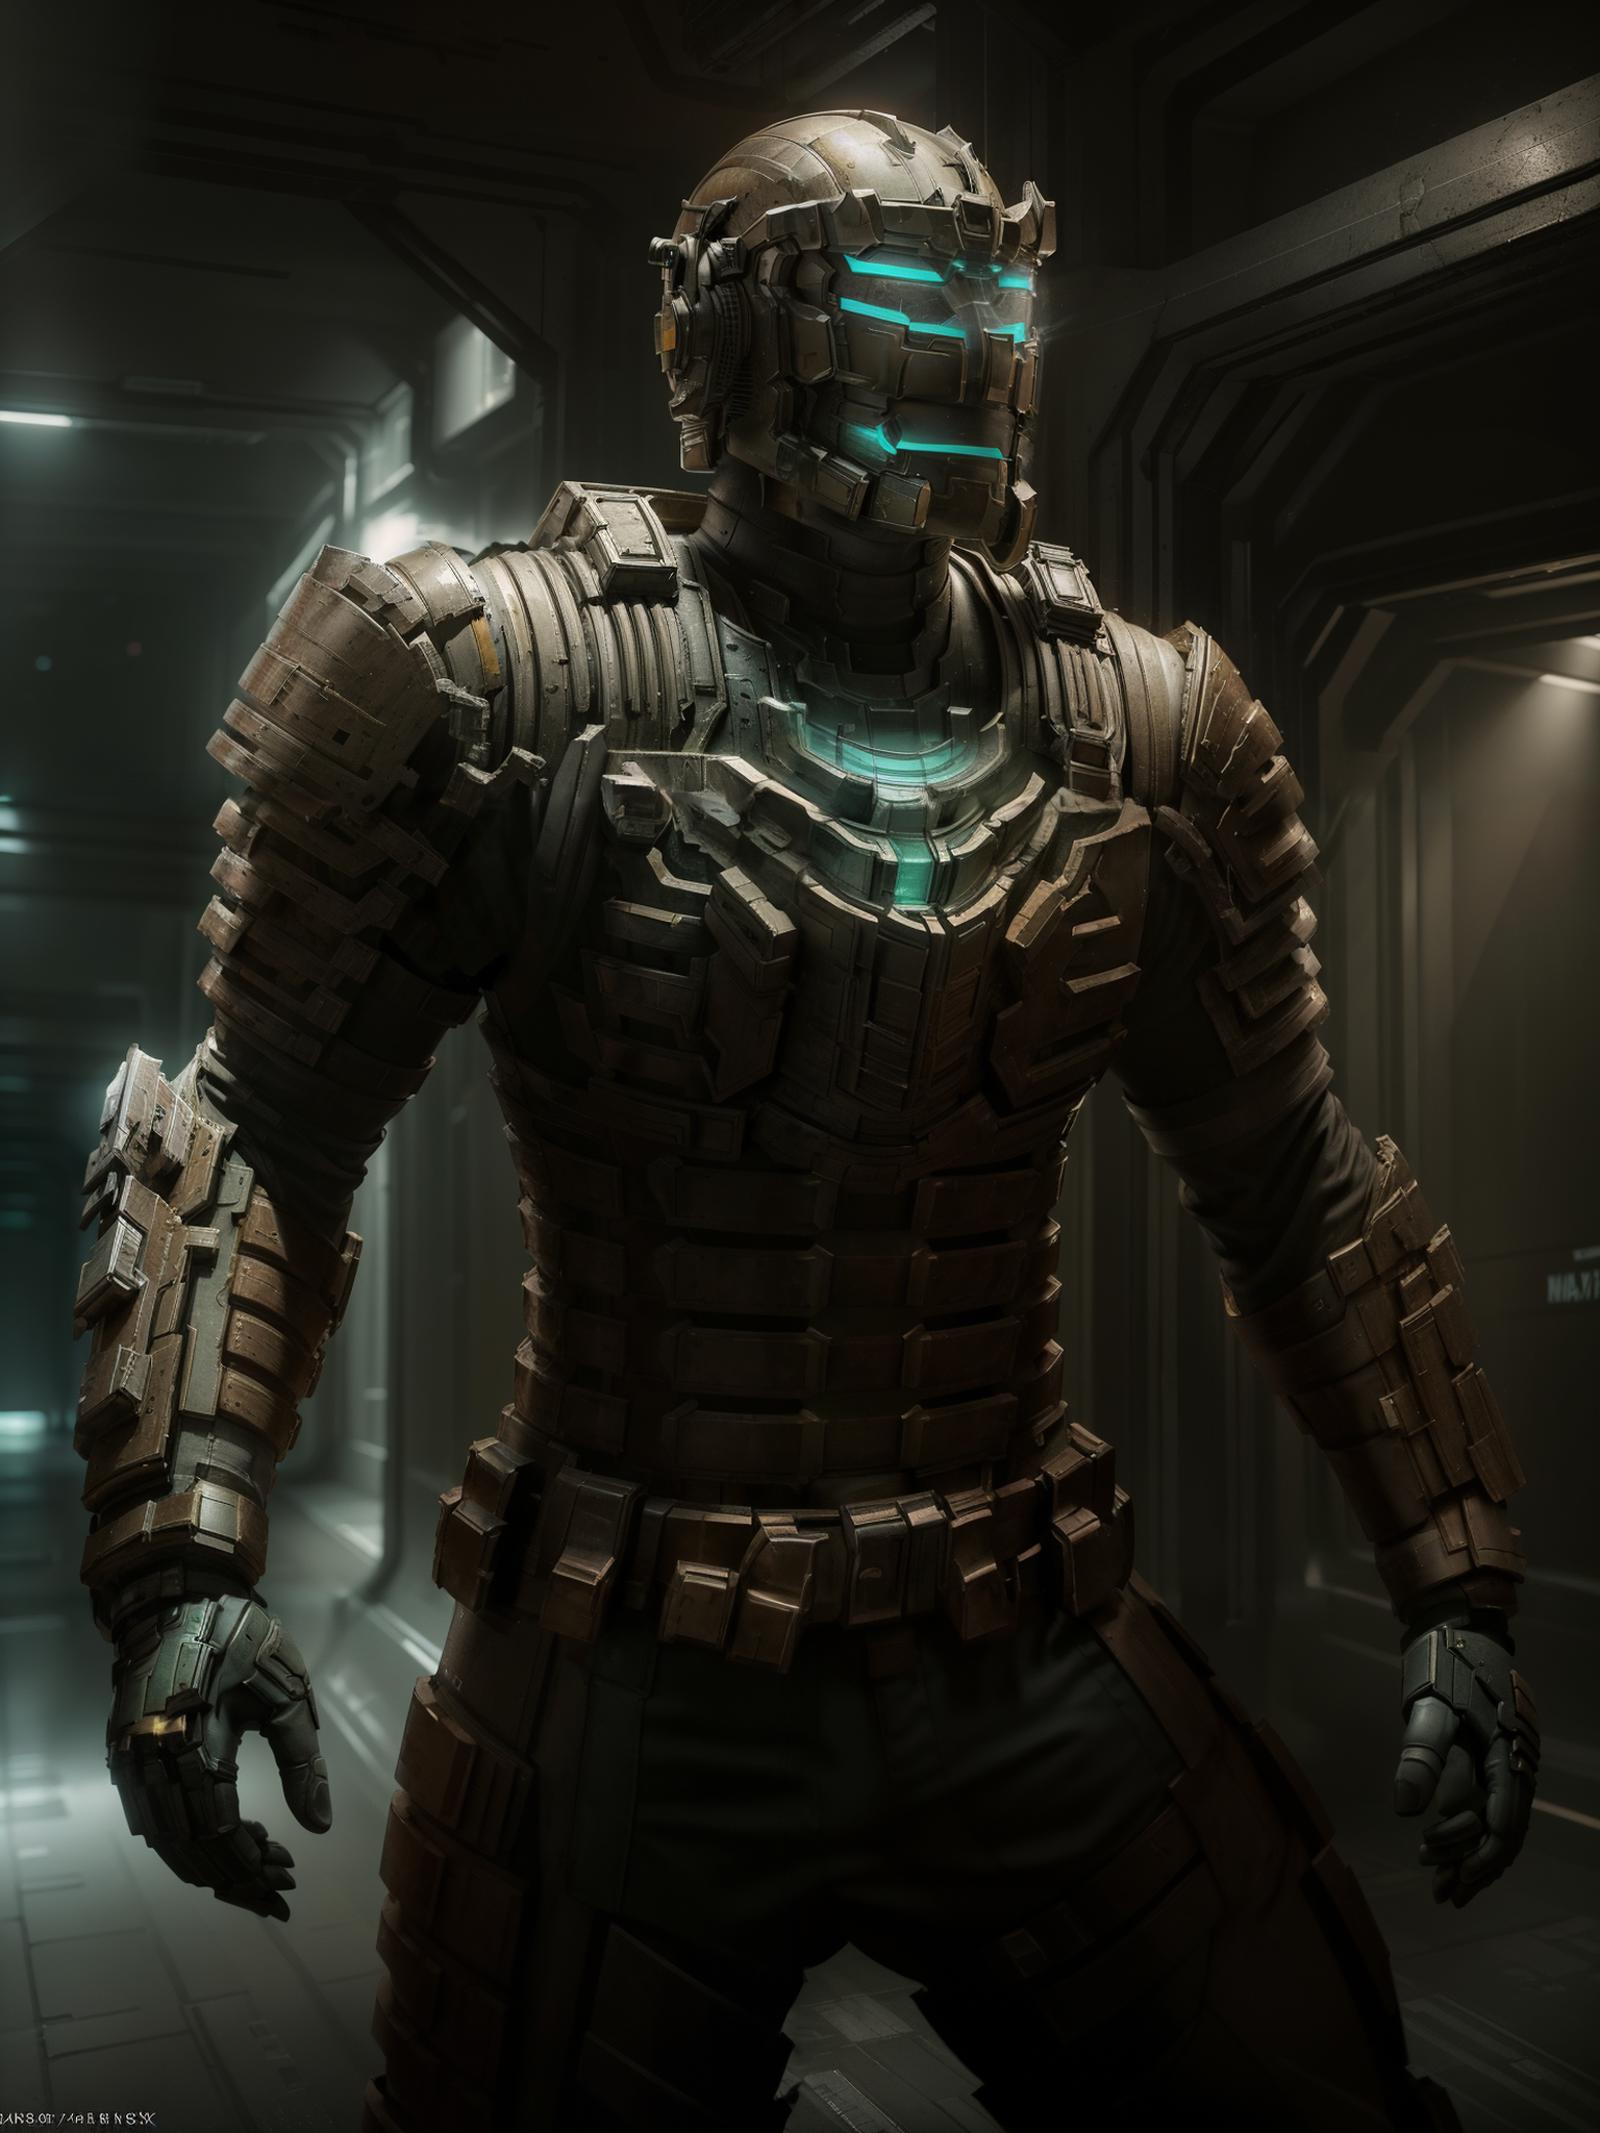 Engineering Suit (Dead Space) LoRA image by Taloji